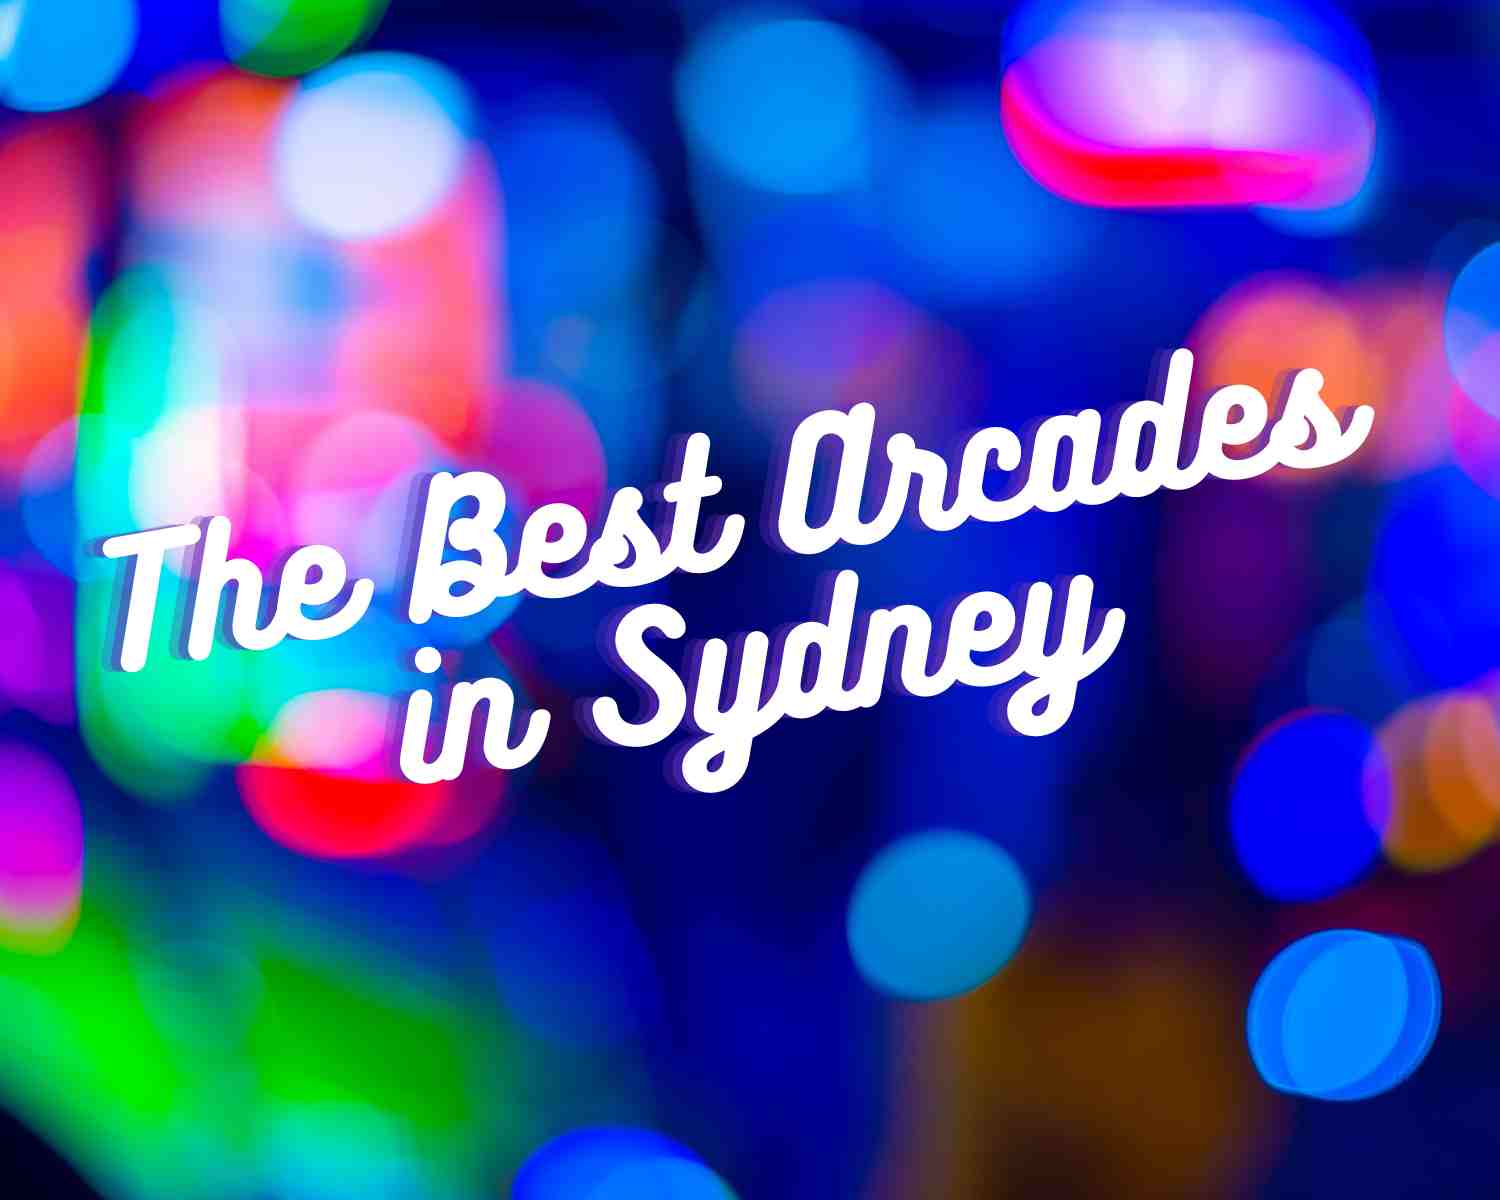 Sydney's Best Arcades